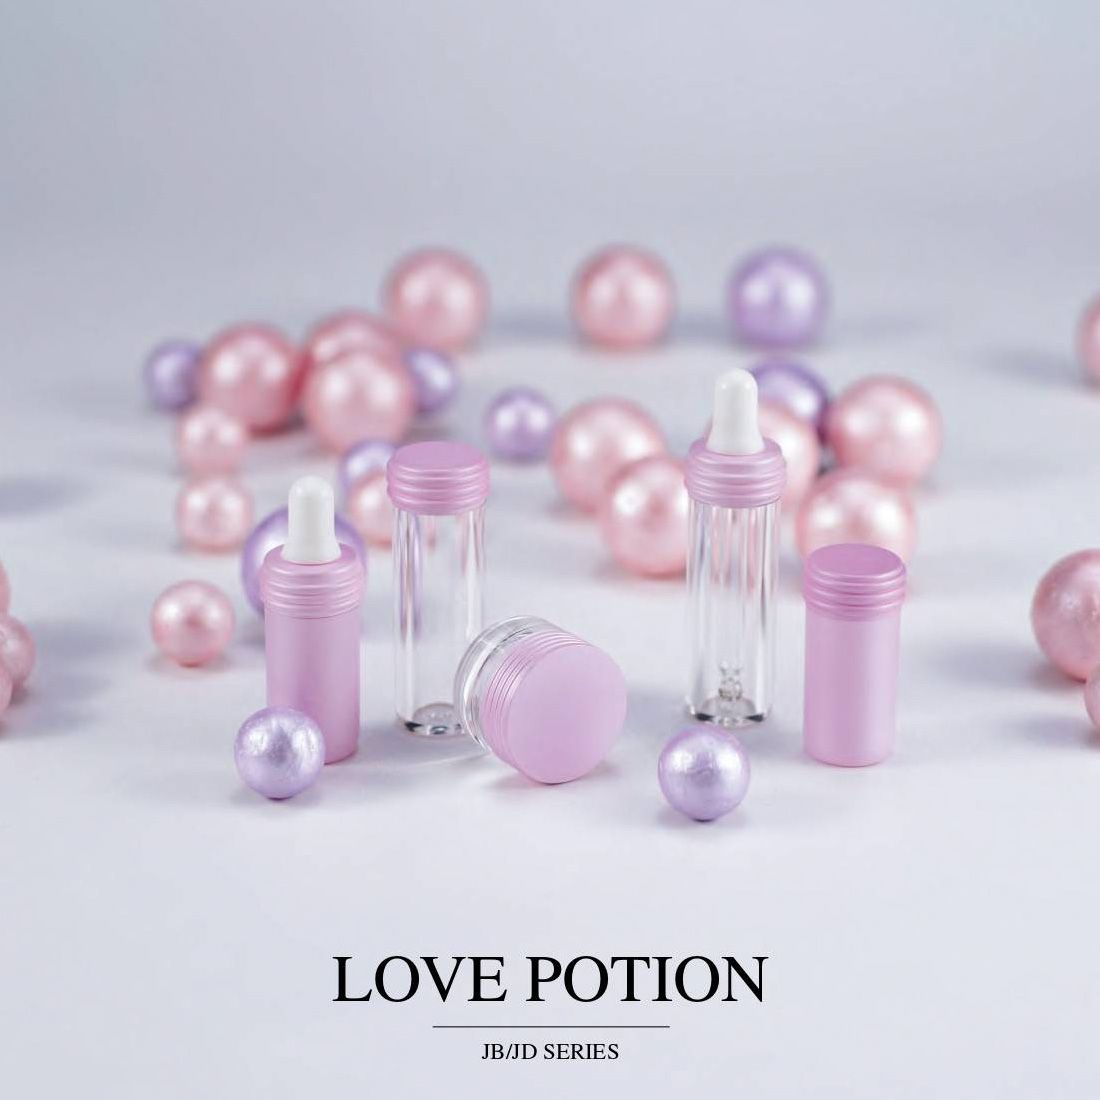 Design de recipiente cometic COSJAR - série Love potion